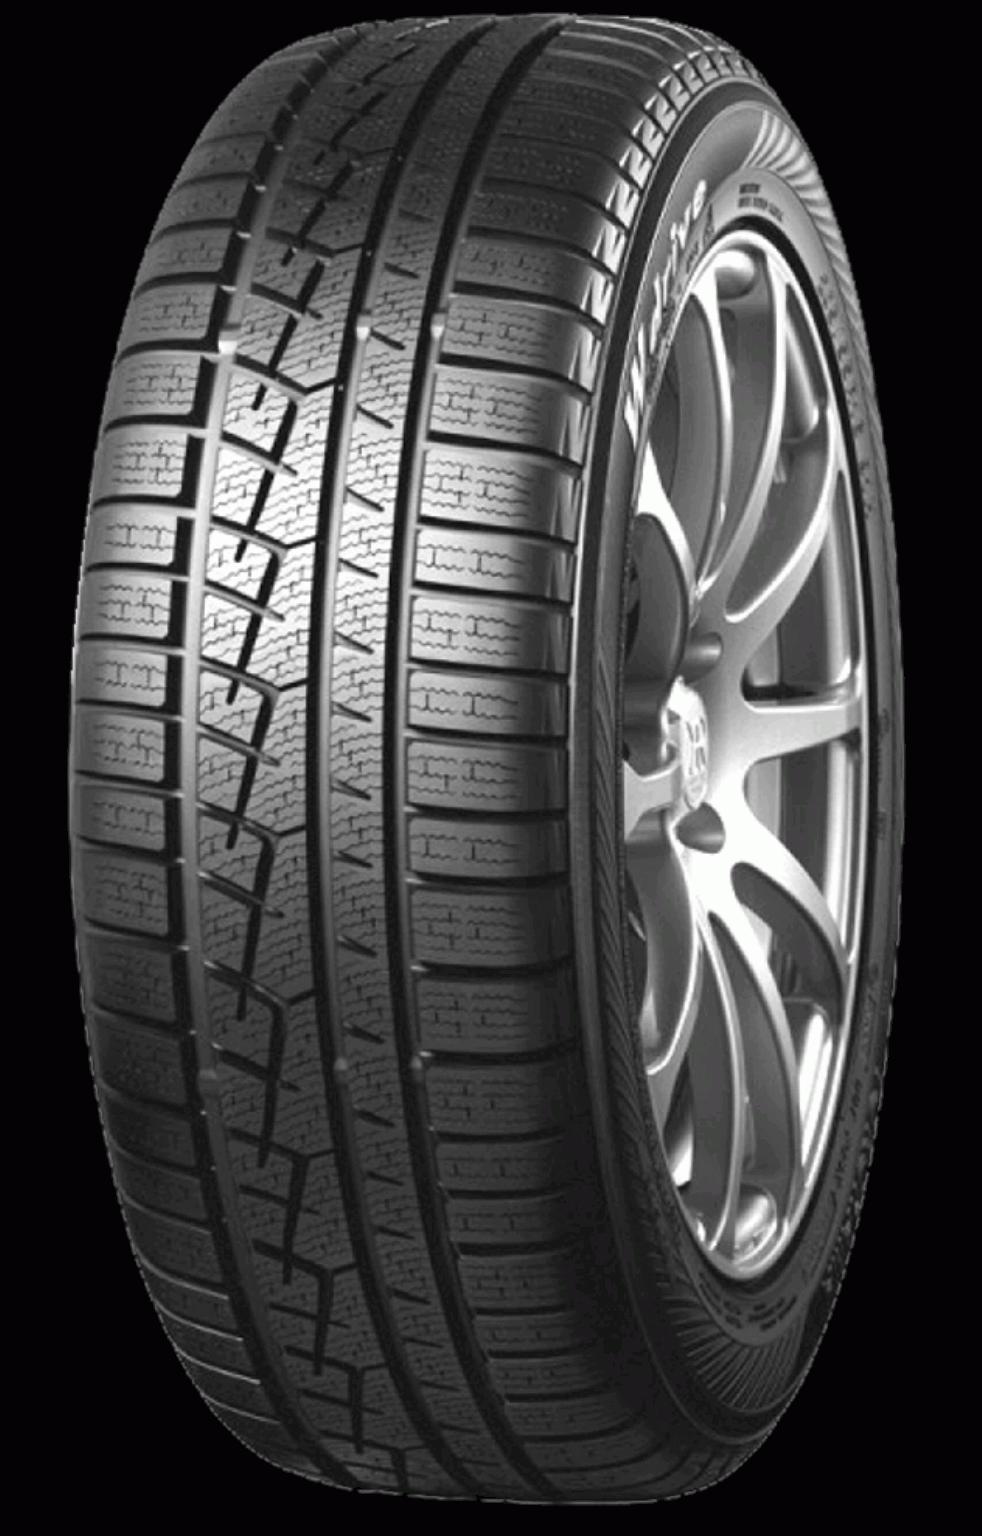 Yokohama W Drive - Tyre Reviews and Tests